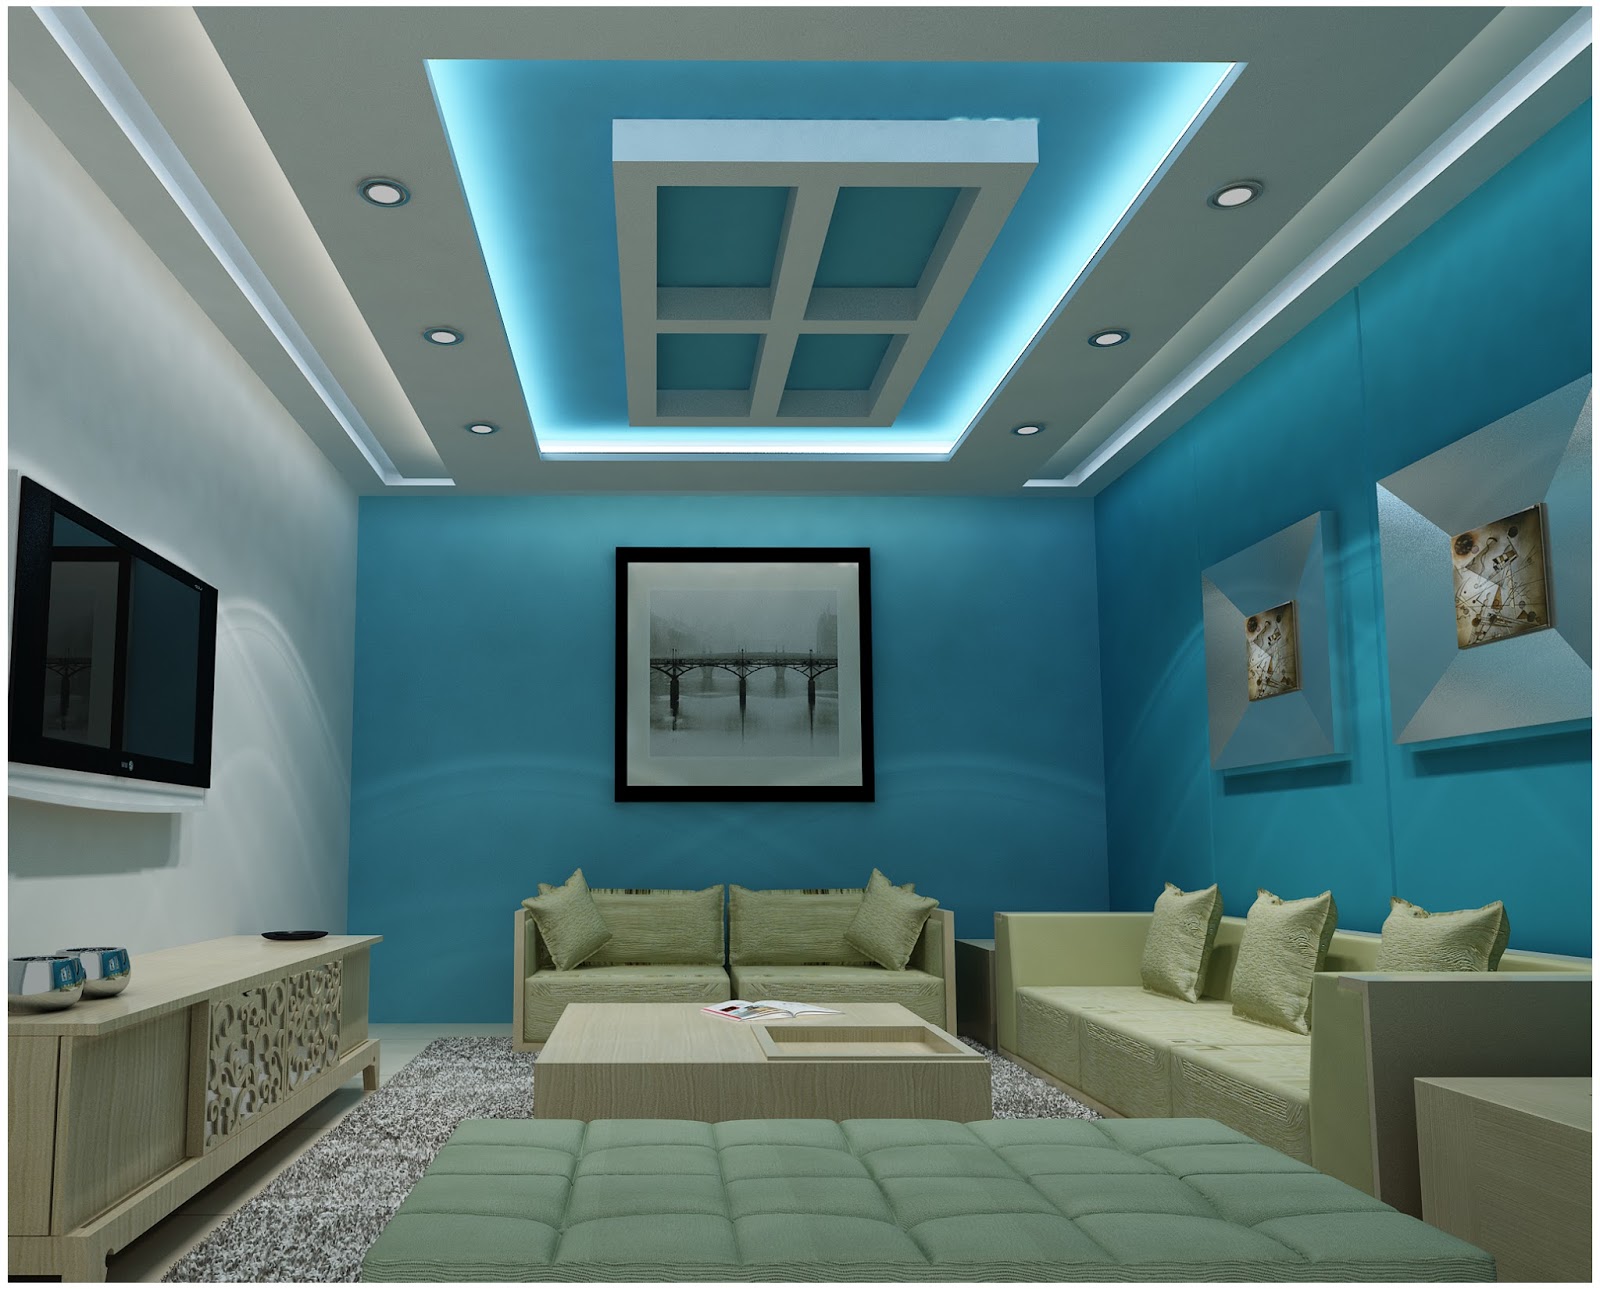 Plaster Ceiling Luxtury | Joy Studio Design Gallery - Best ...